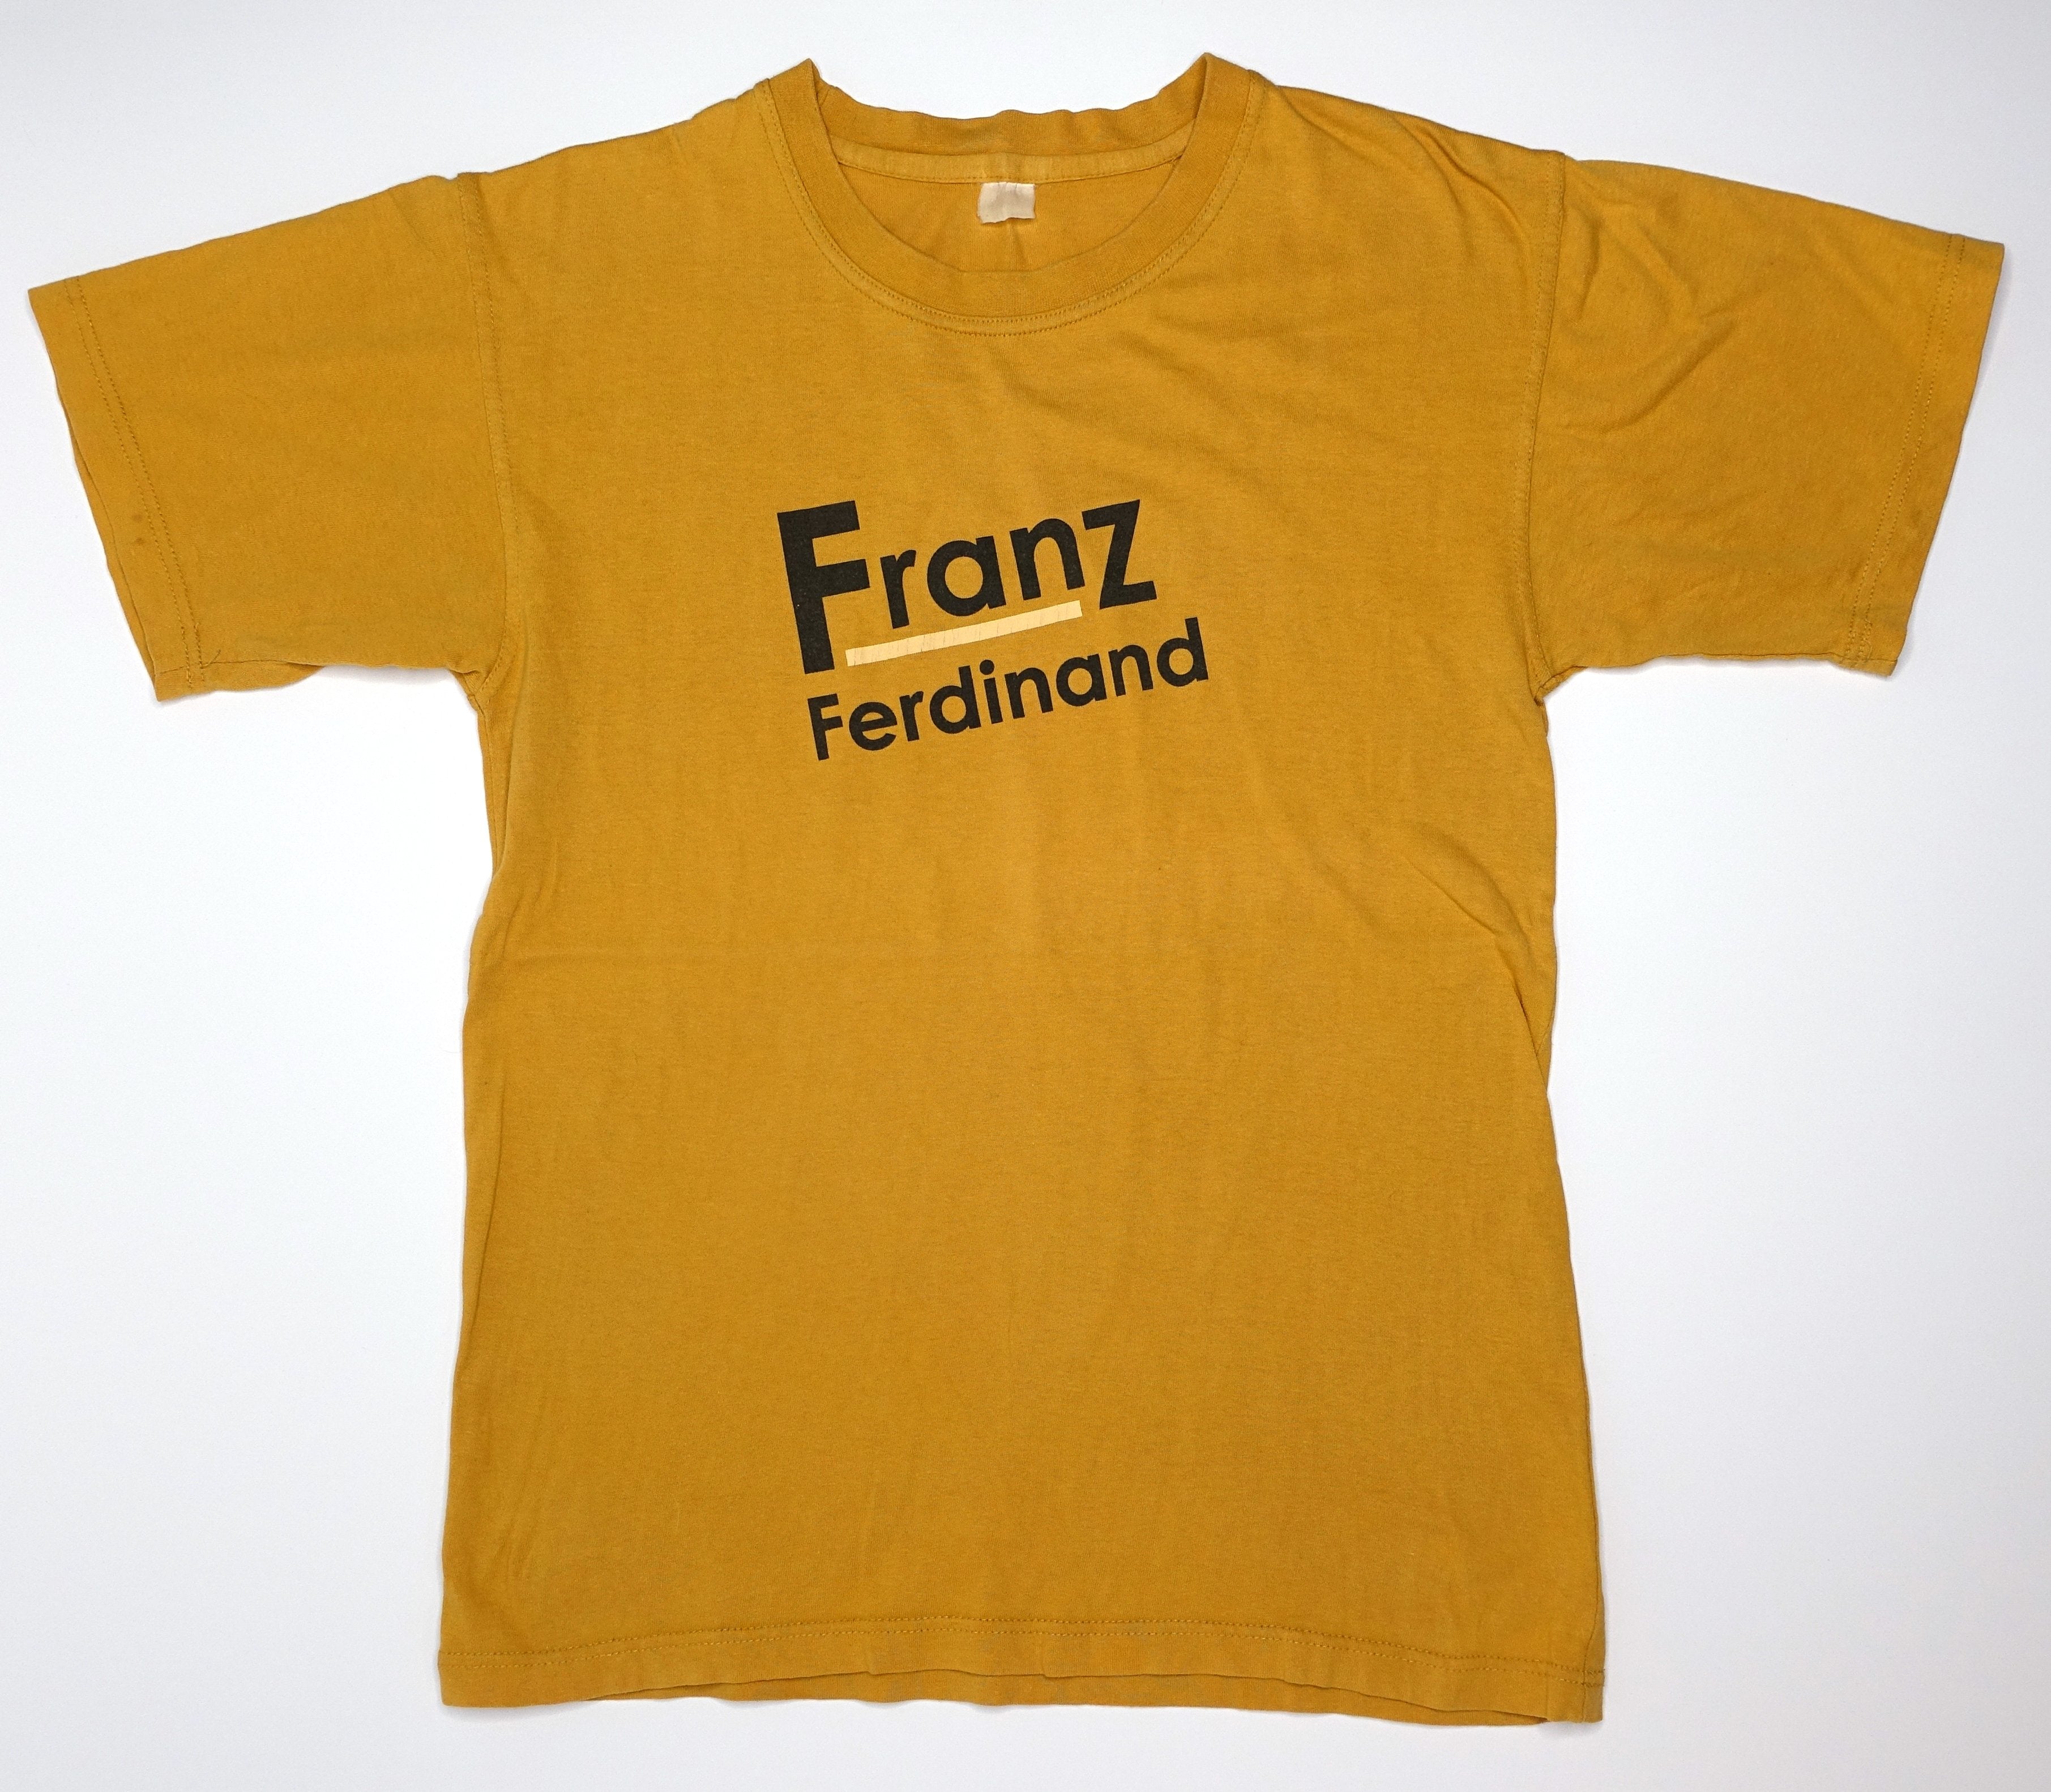 Franz Ferdinand - S/T 2004 EU Tour Shirt Size Large